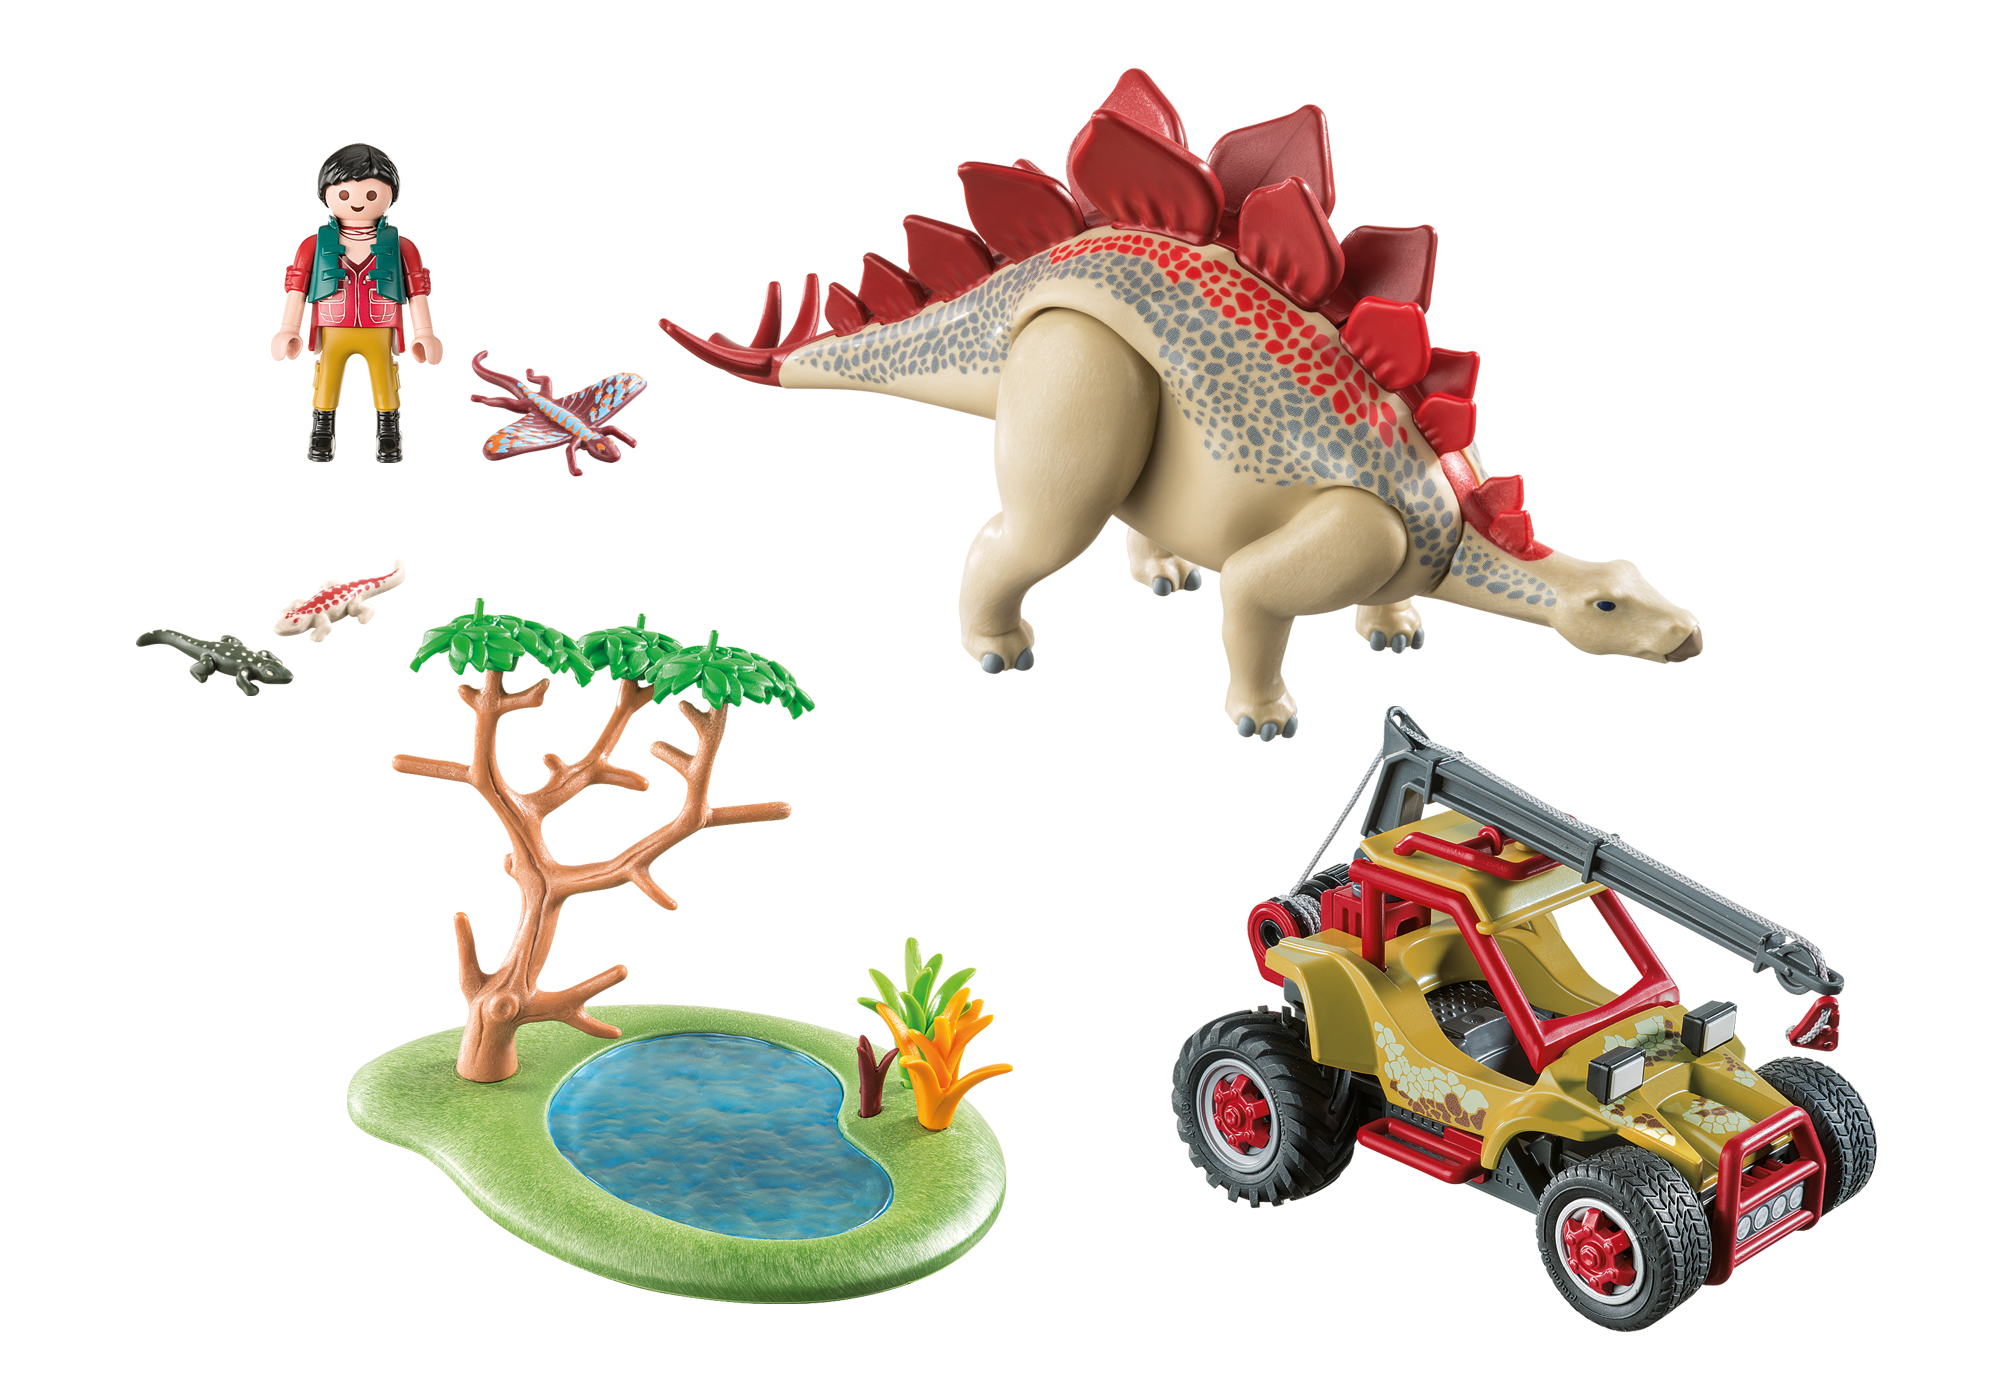 playmobil explorer vehicle with stegosaurus